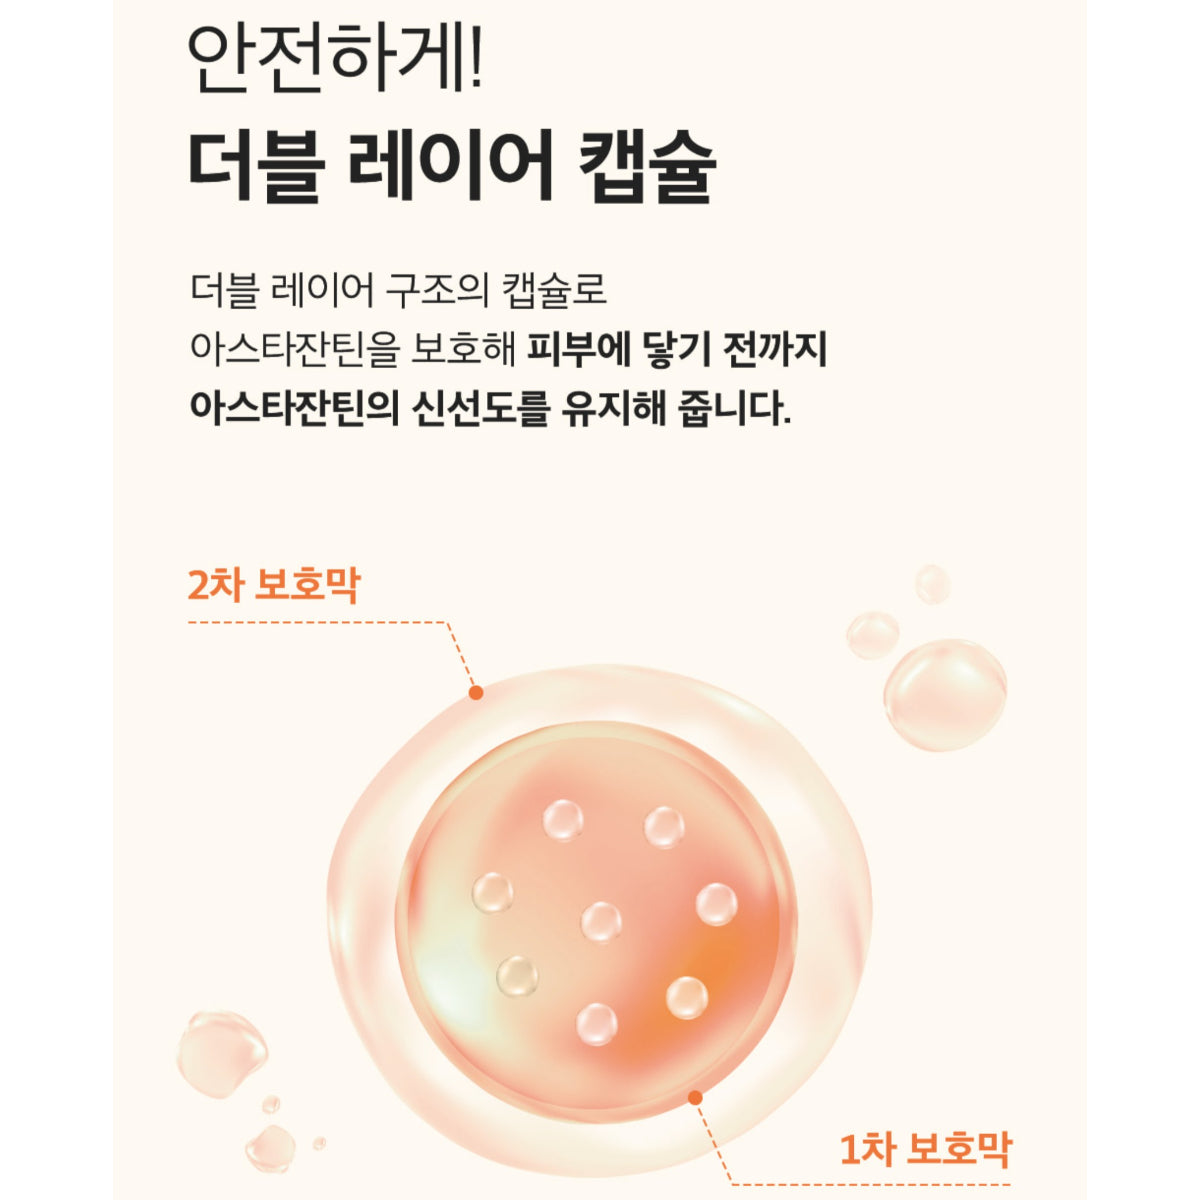 SUNGBOON EDITOR Active Marine Astaxanthin Capsule Serum 30ml/bottle Spots, freckles, blemishes, skin tone, antioxidant, collagen, hyaluronic acid ceramide / from Seoul, Korea